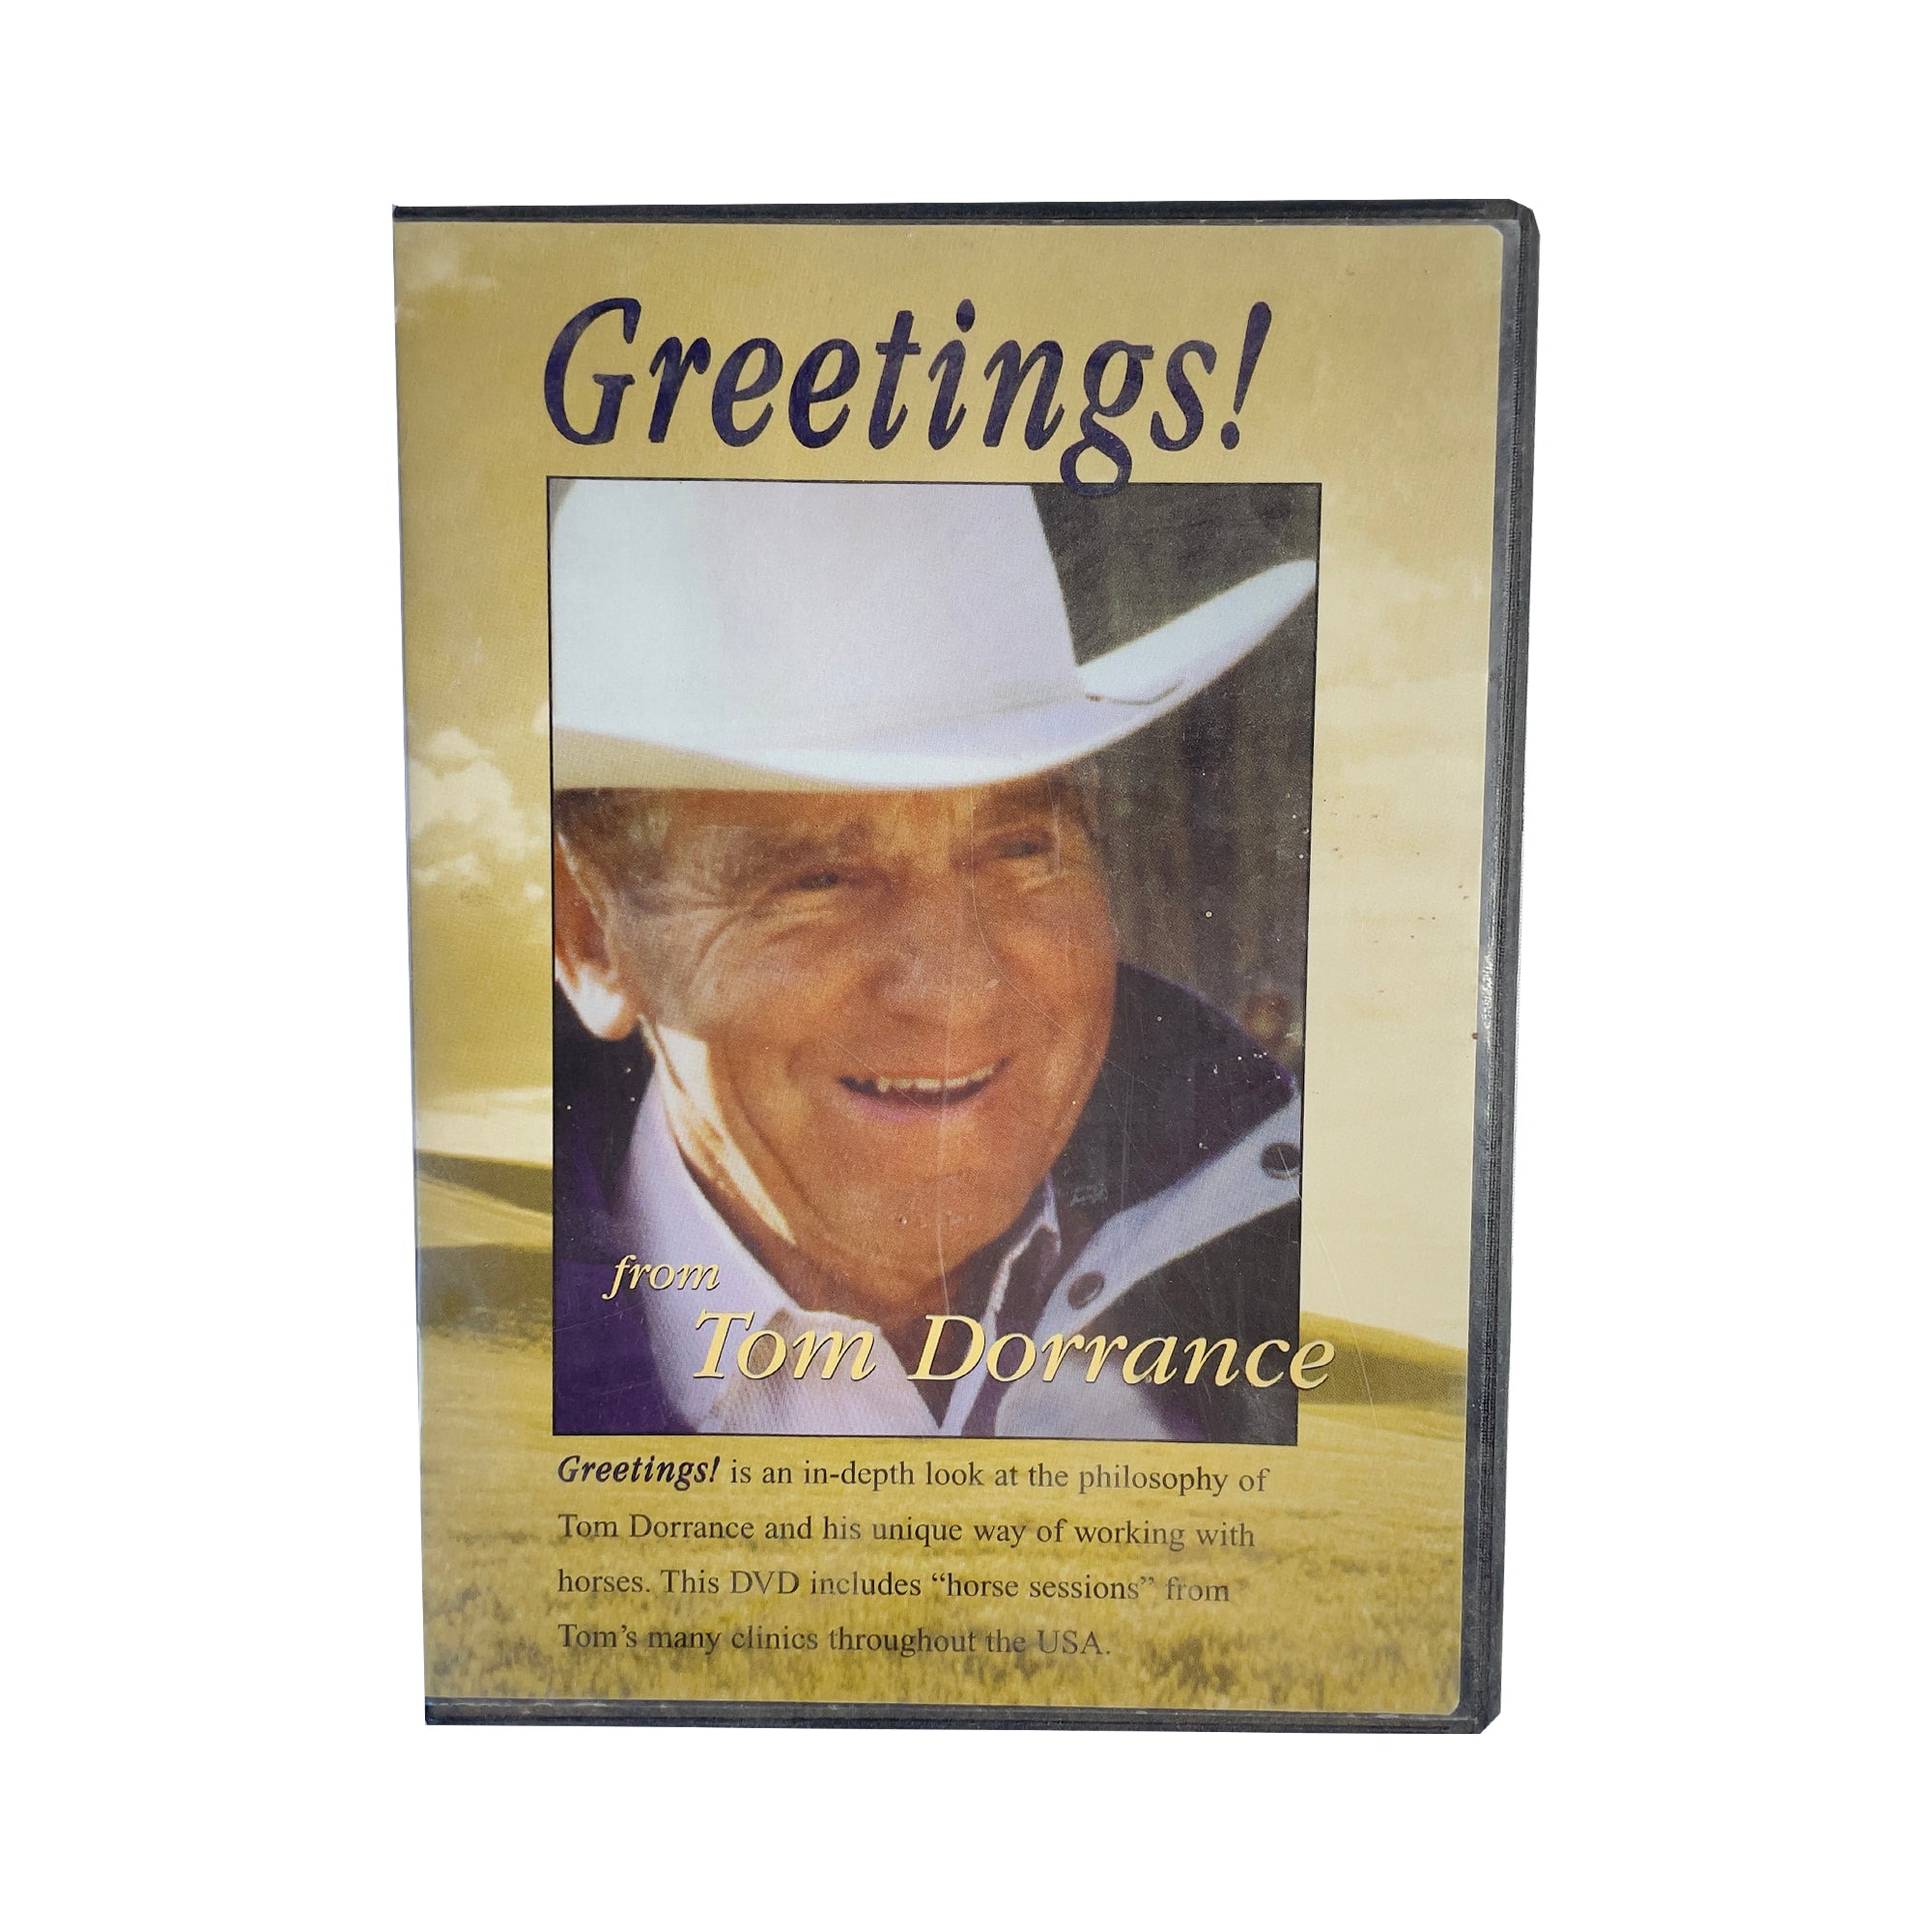 Greetings DVD by Tom Dorrance